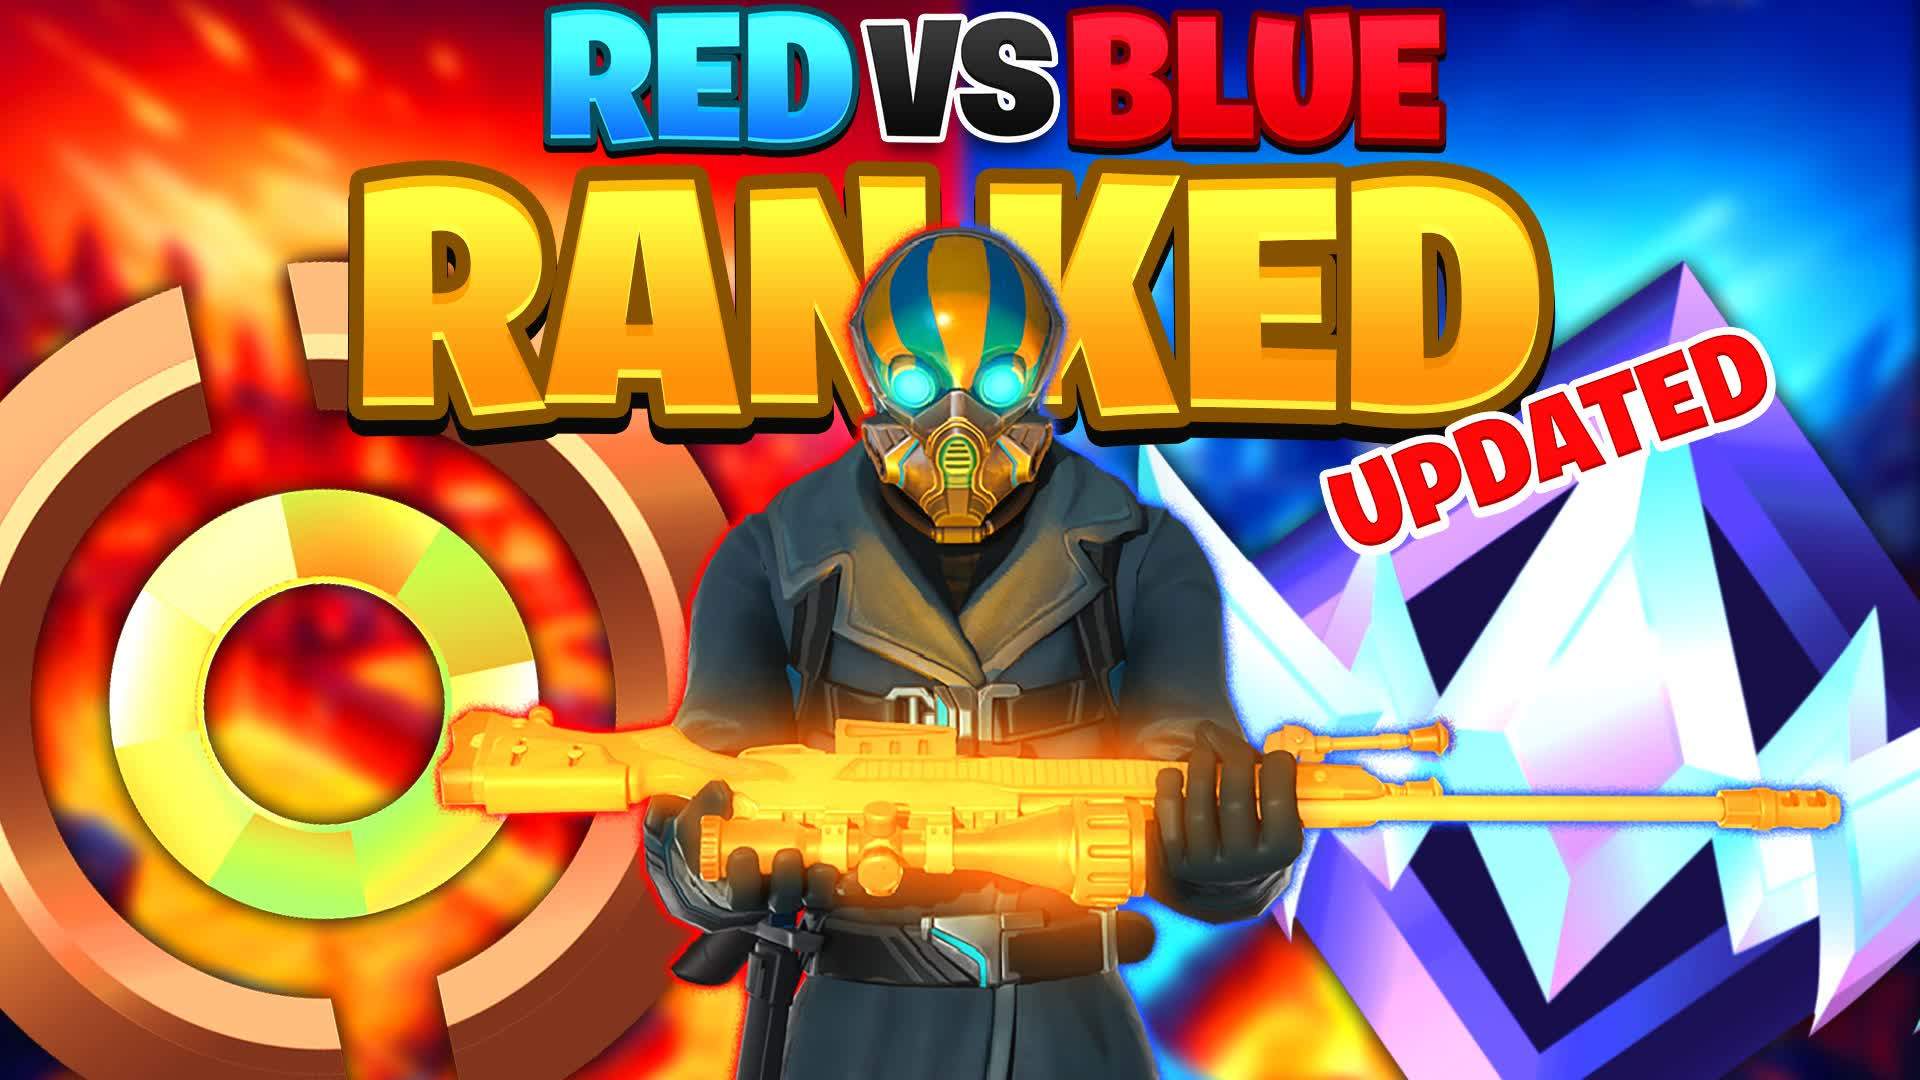 ✅CRAZYY RANKED RED VS BLUE 🔴🔵